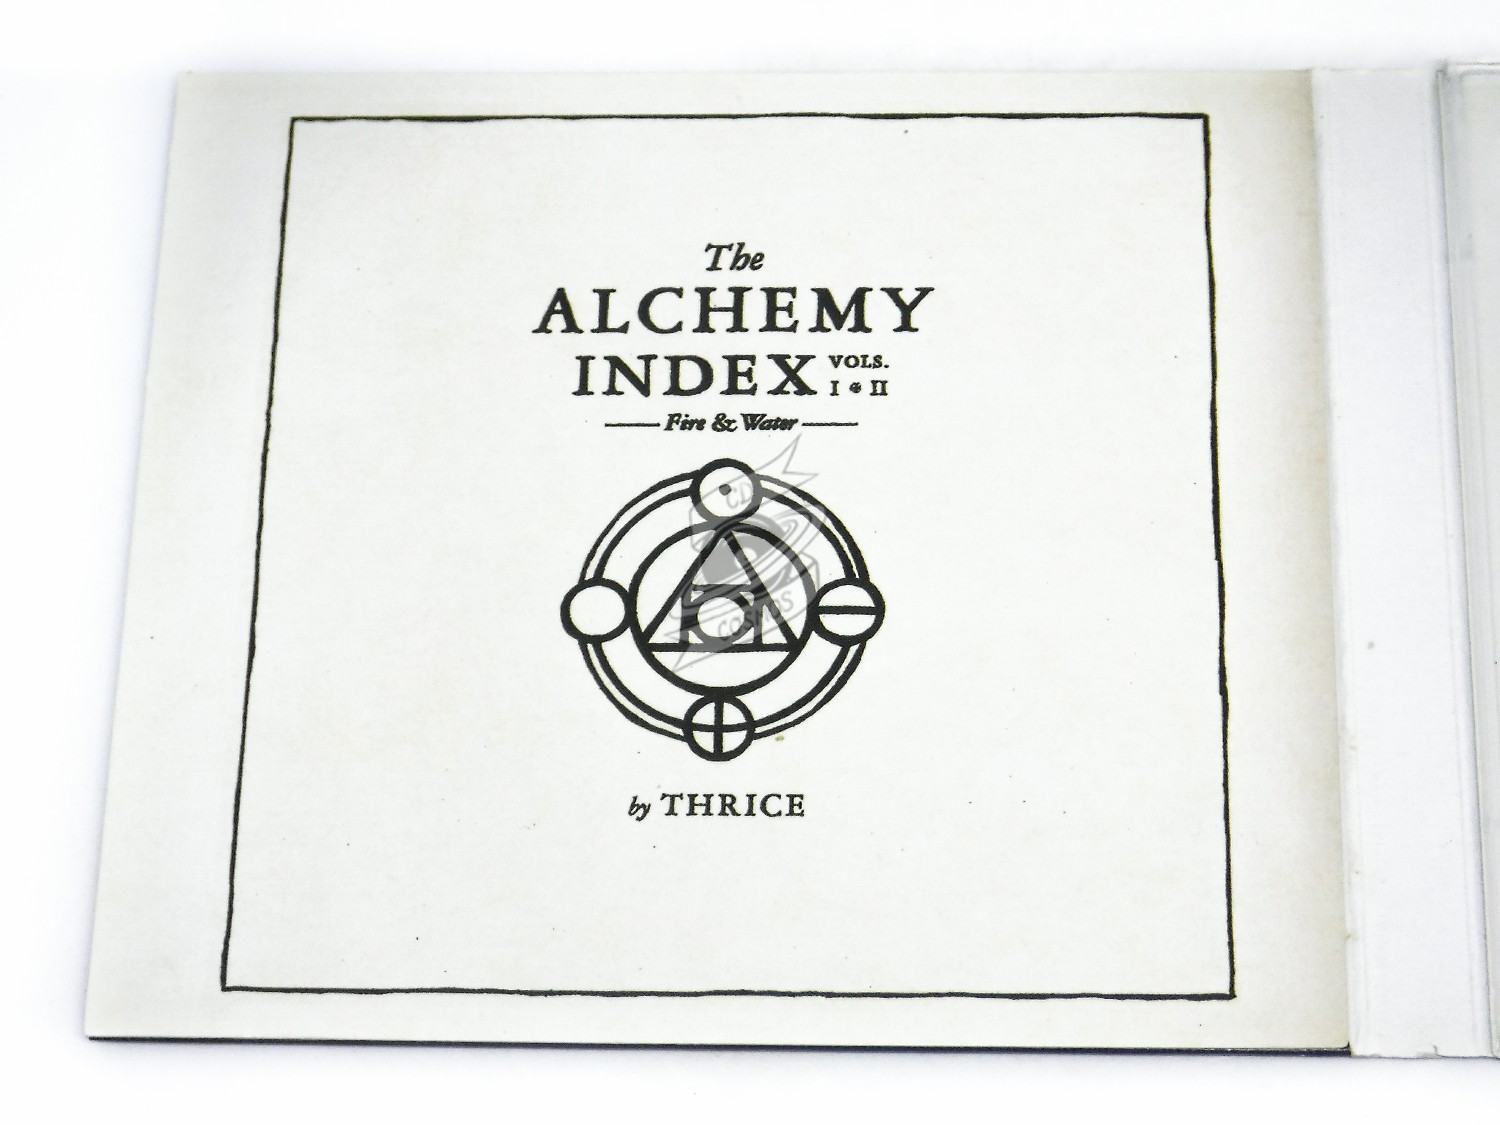 The Alchemy Index Vols. III & IV - Wikipedia